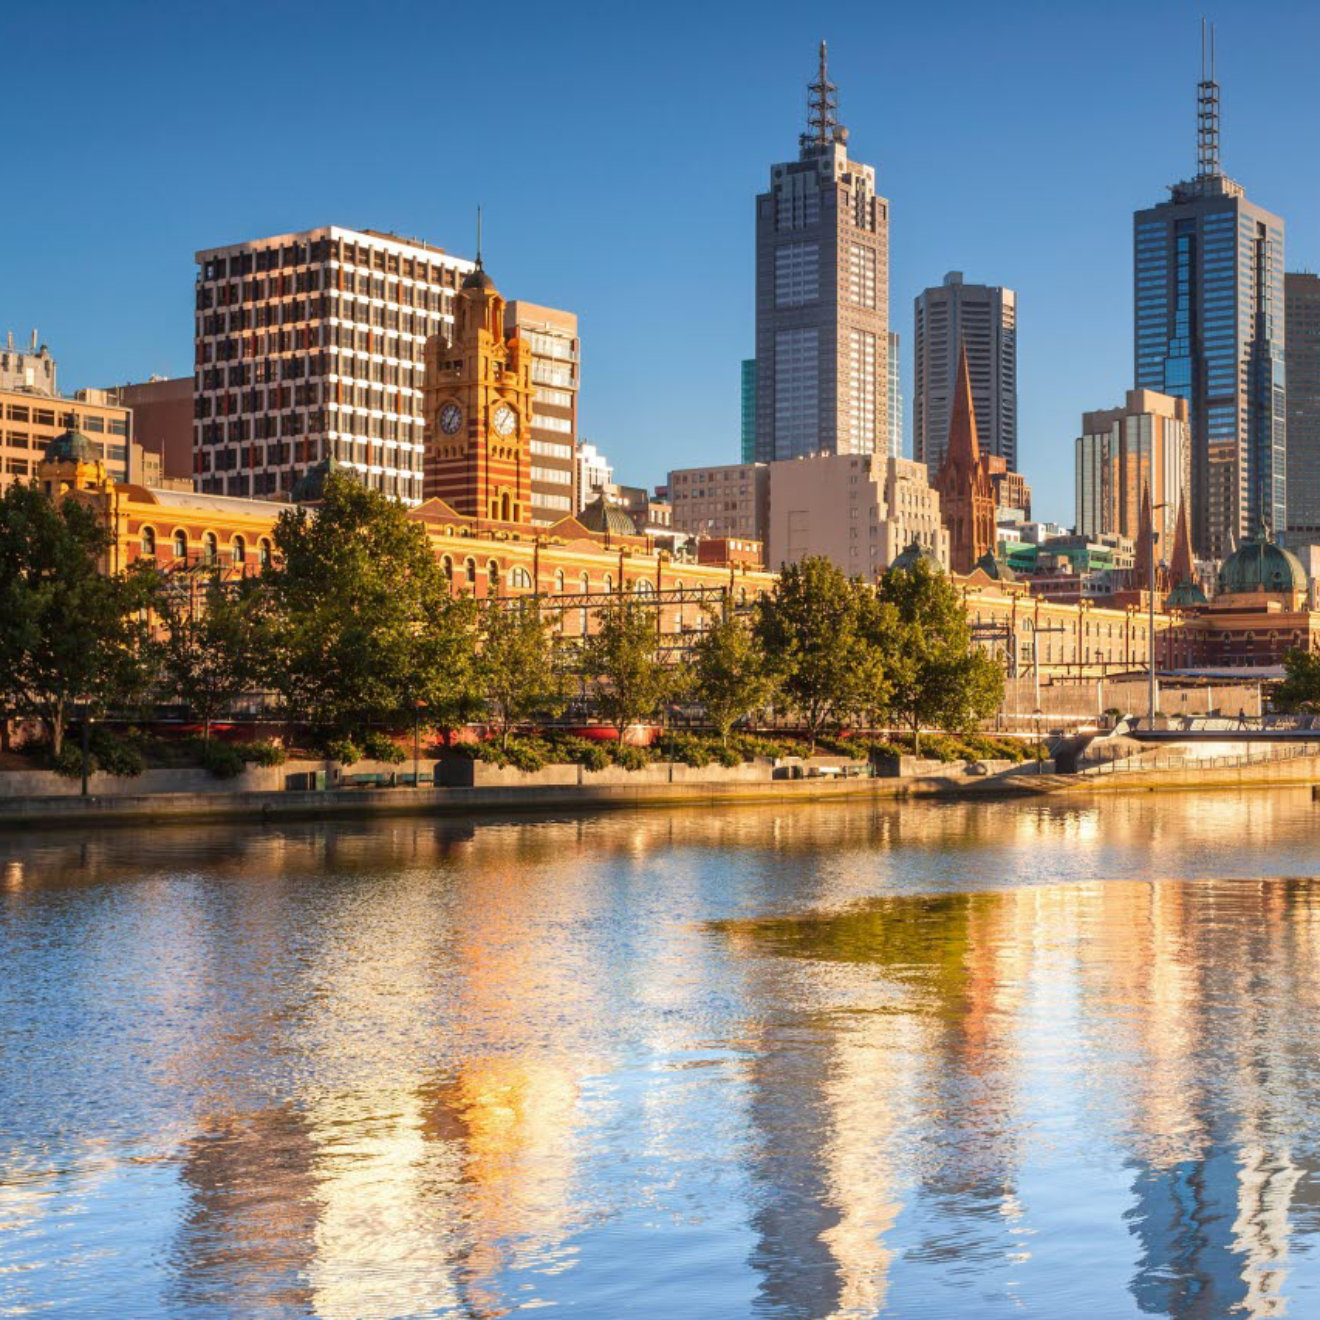 Melbourne-Australia-Skyline-Shutterstock